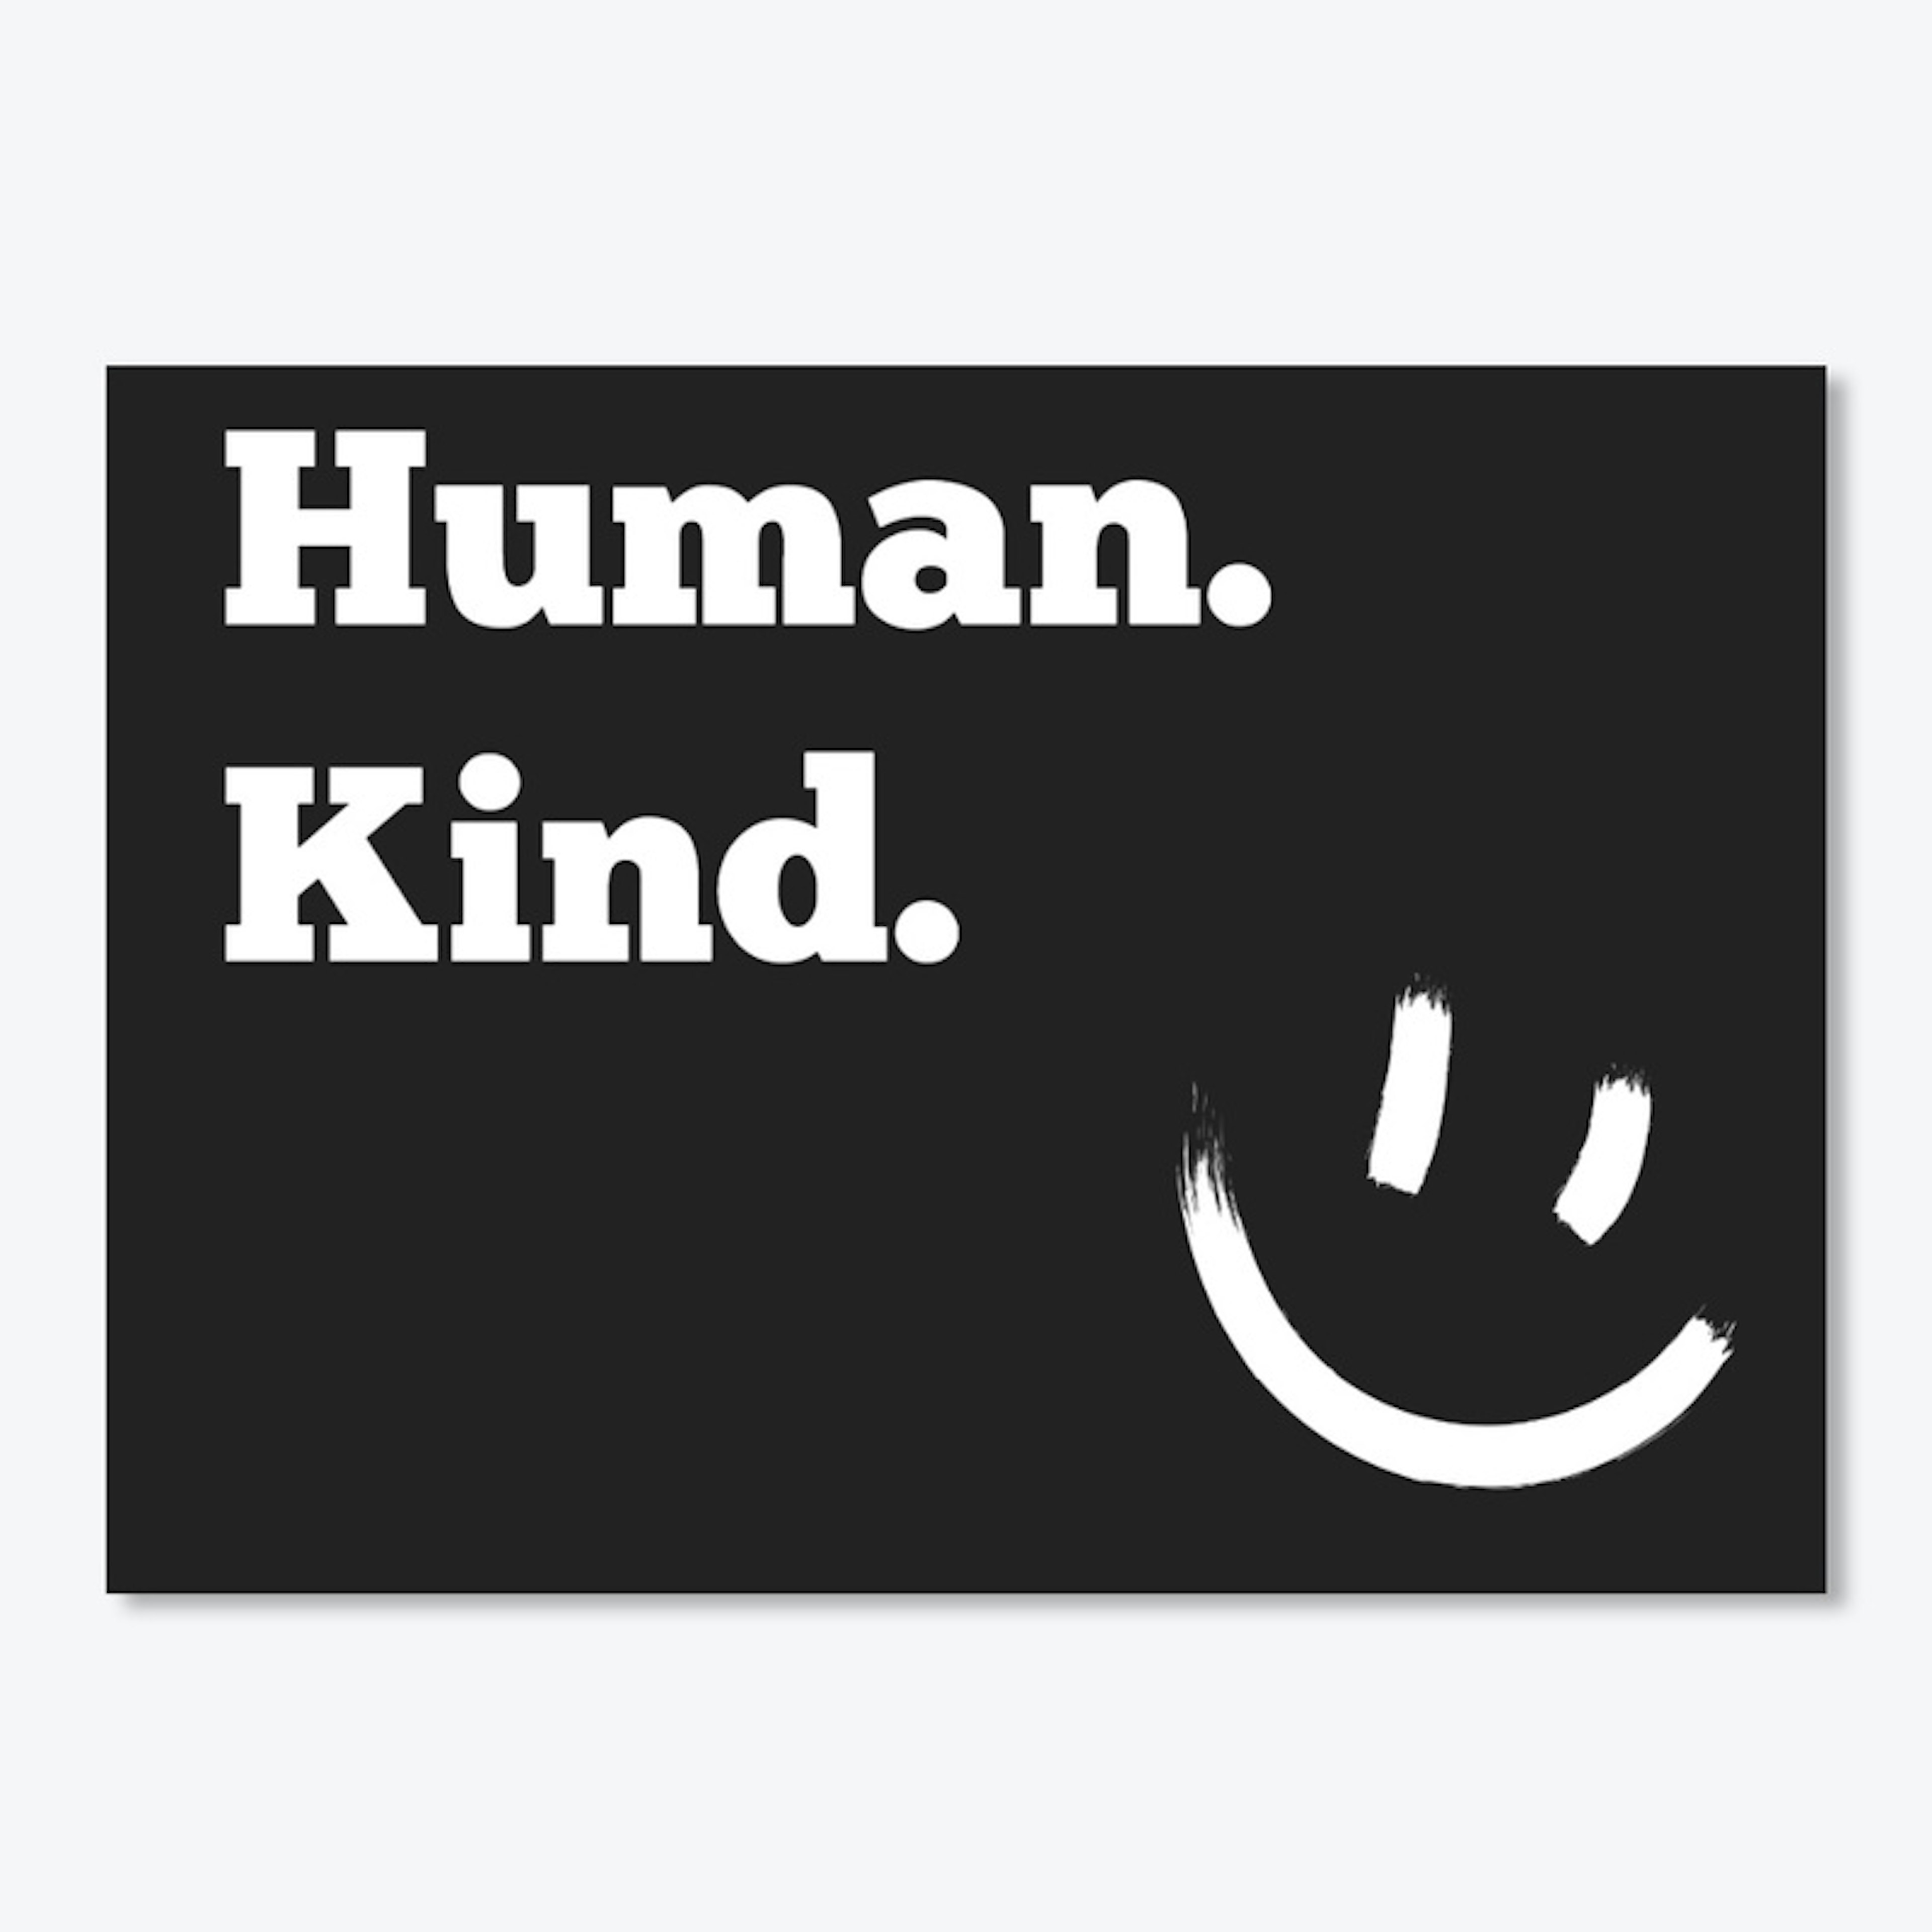 Human. Kind.